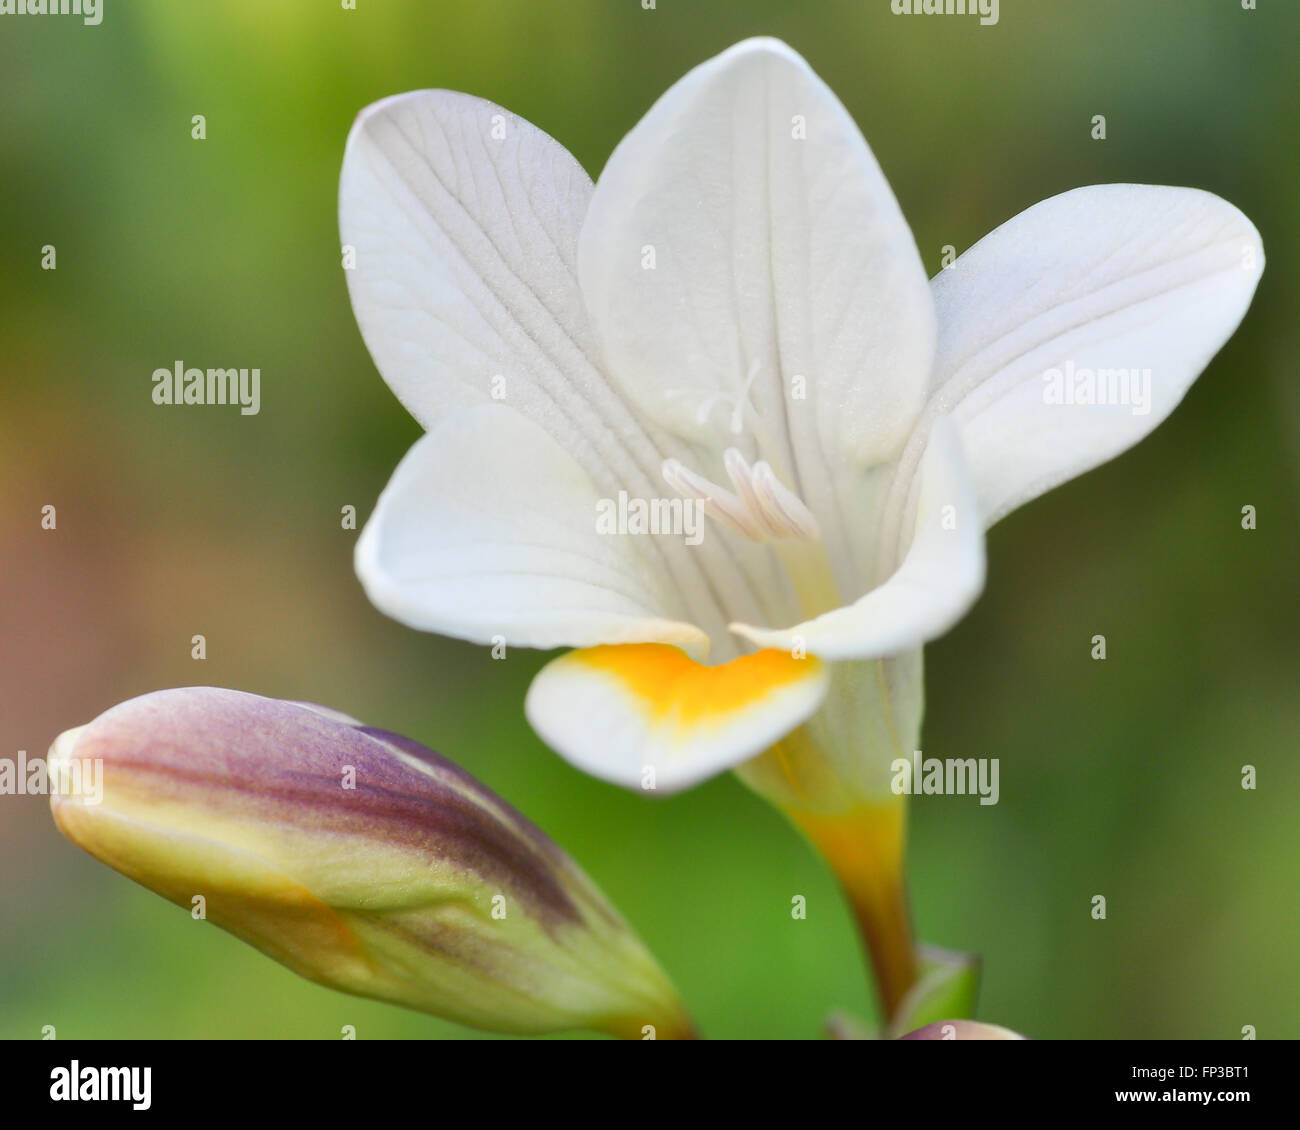 Freesia Flower White and Yellow Stock Photo